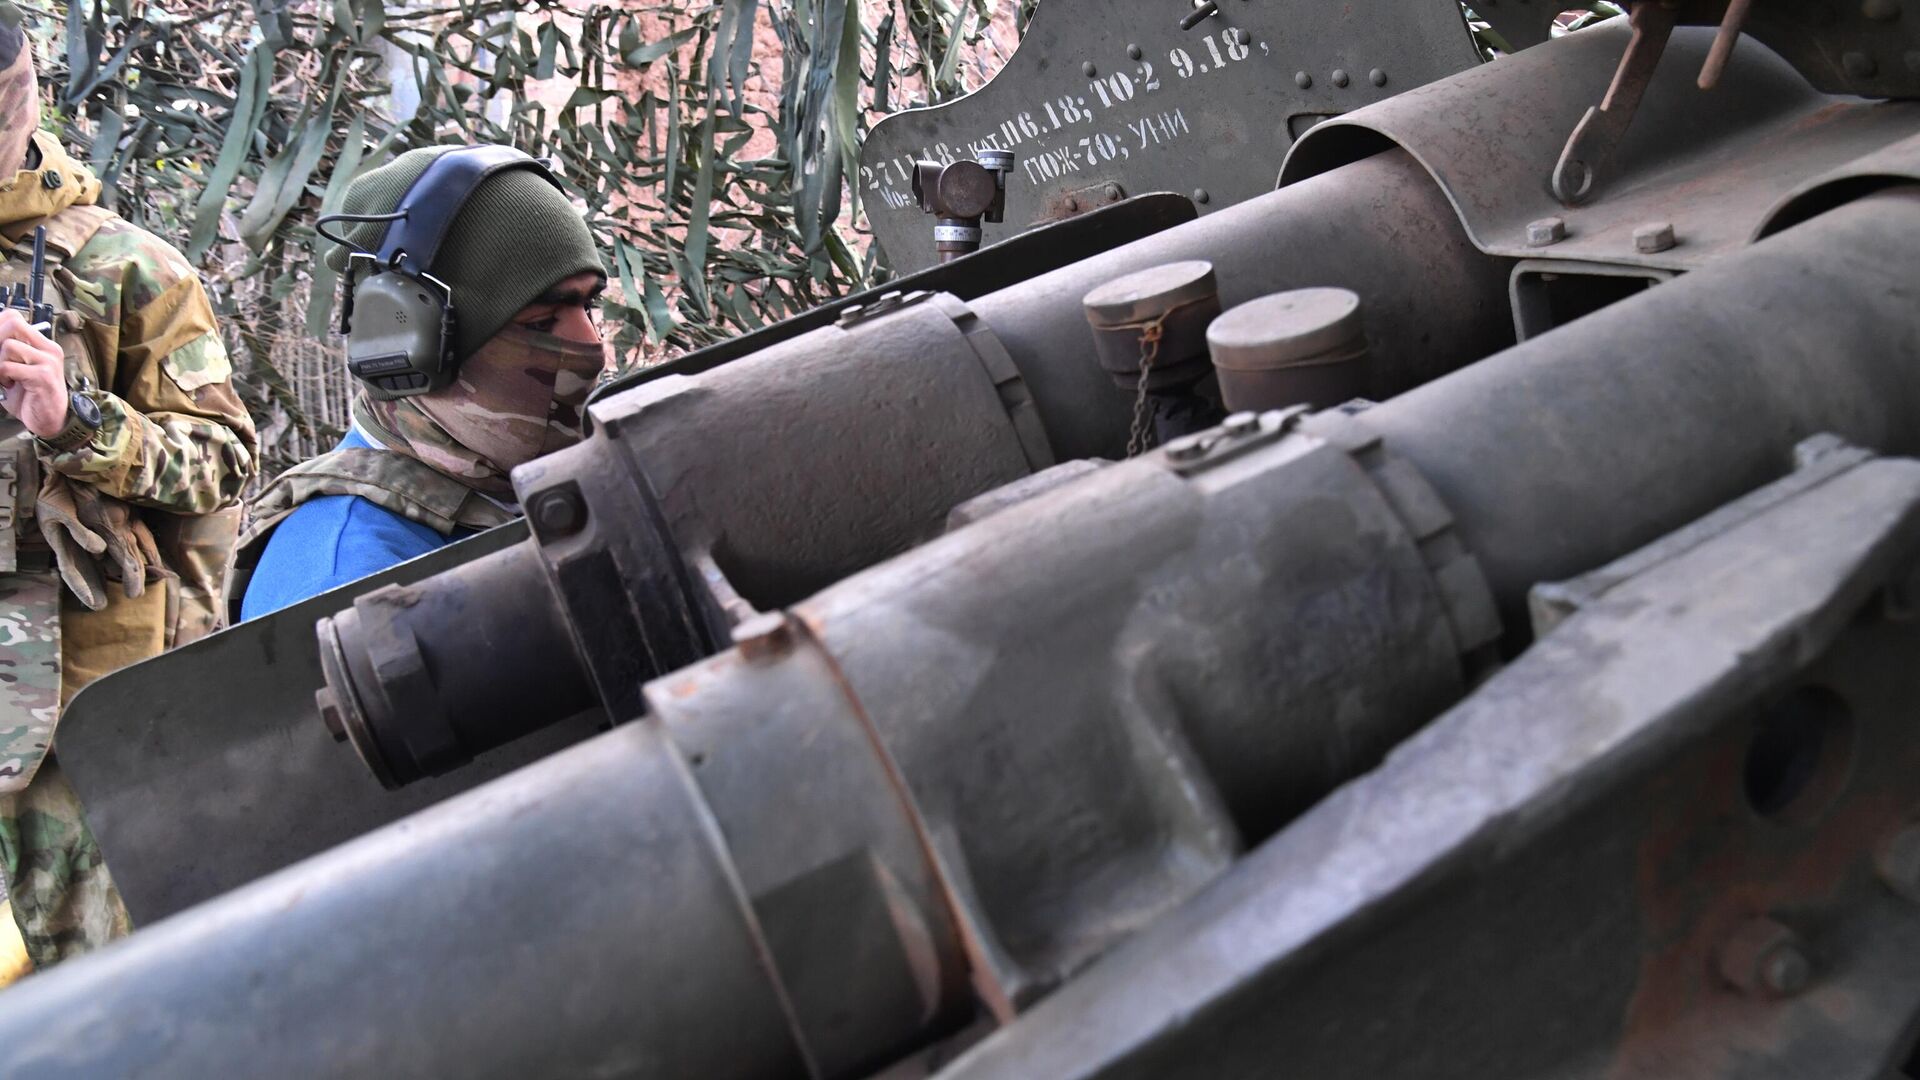 Боец артиллерийского расчета ЧВК Вагнер на позициях в ходе спецоперации в ДНР - Sputnik Латвия, 1920, 07.09.2022